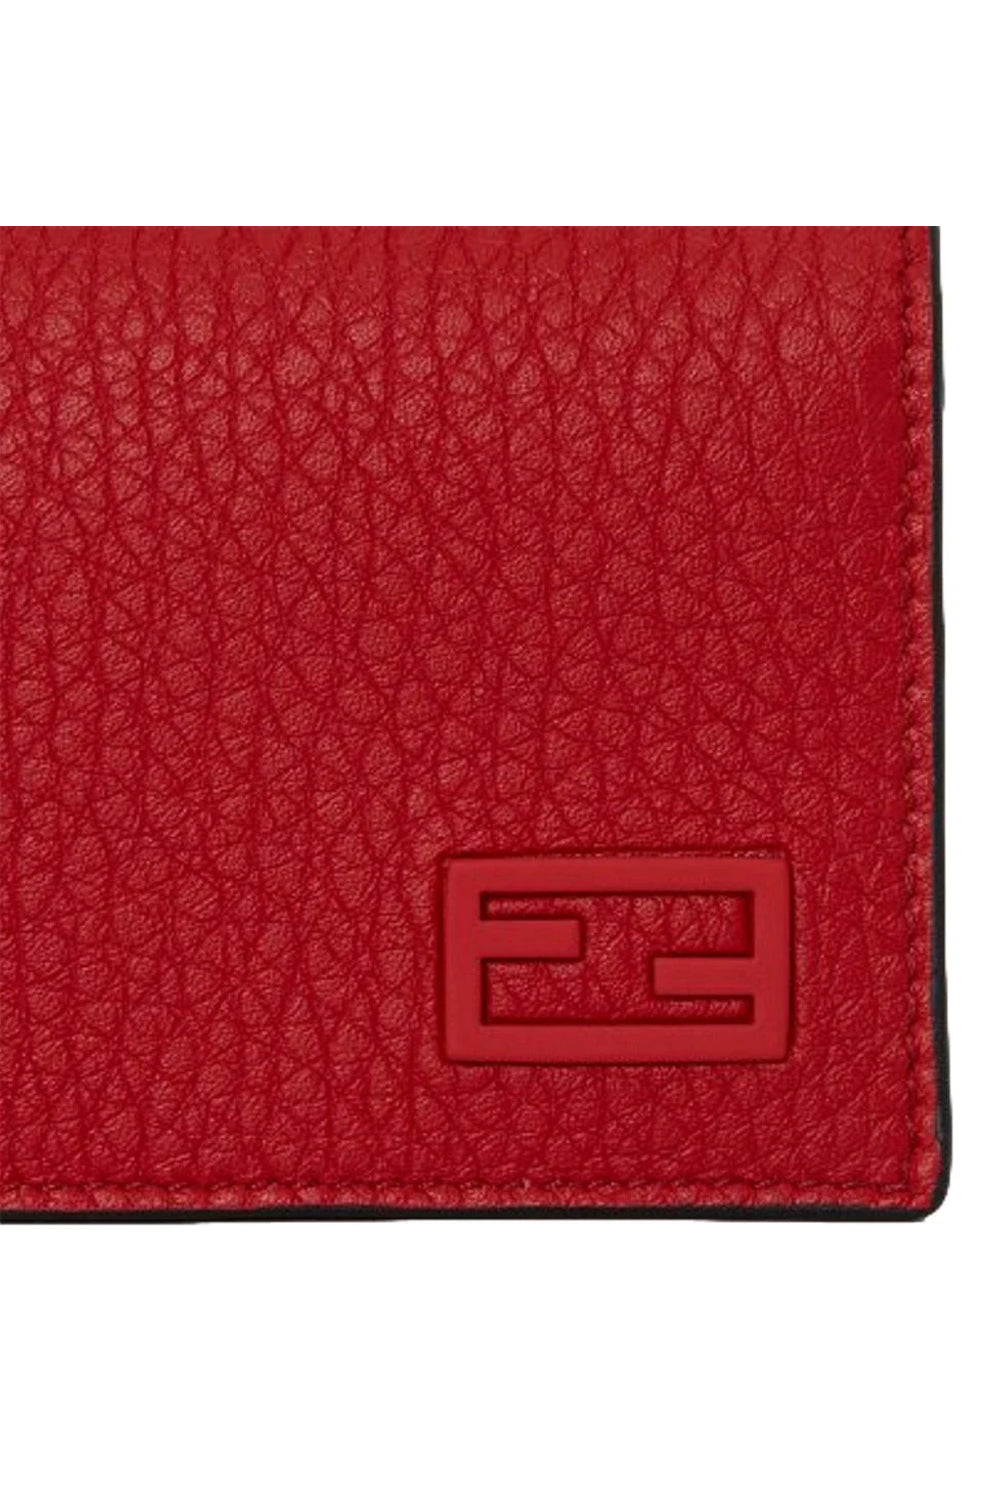 Fendi Red Grained Leather Baguette Logo Card Case Wallet